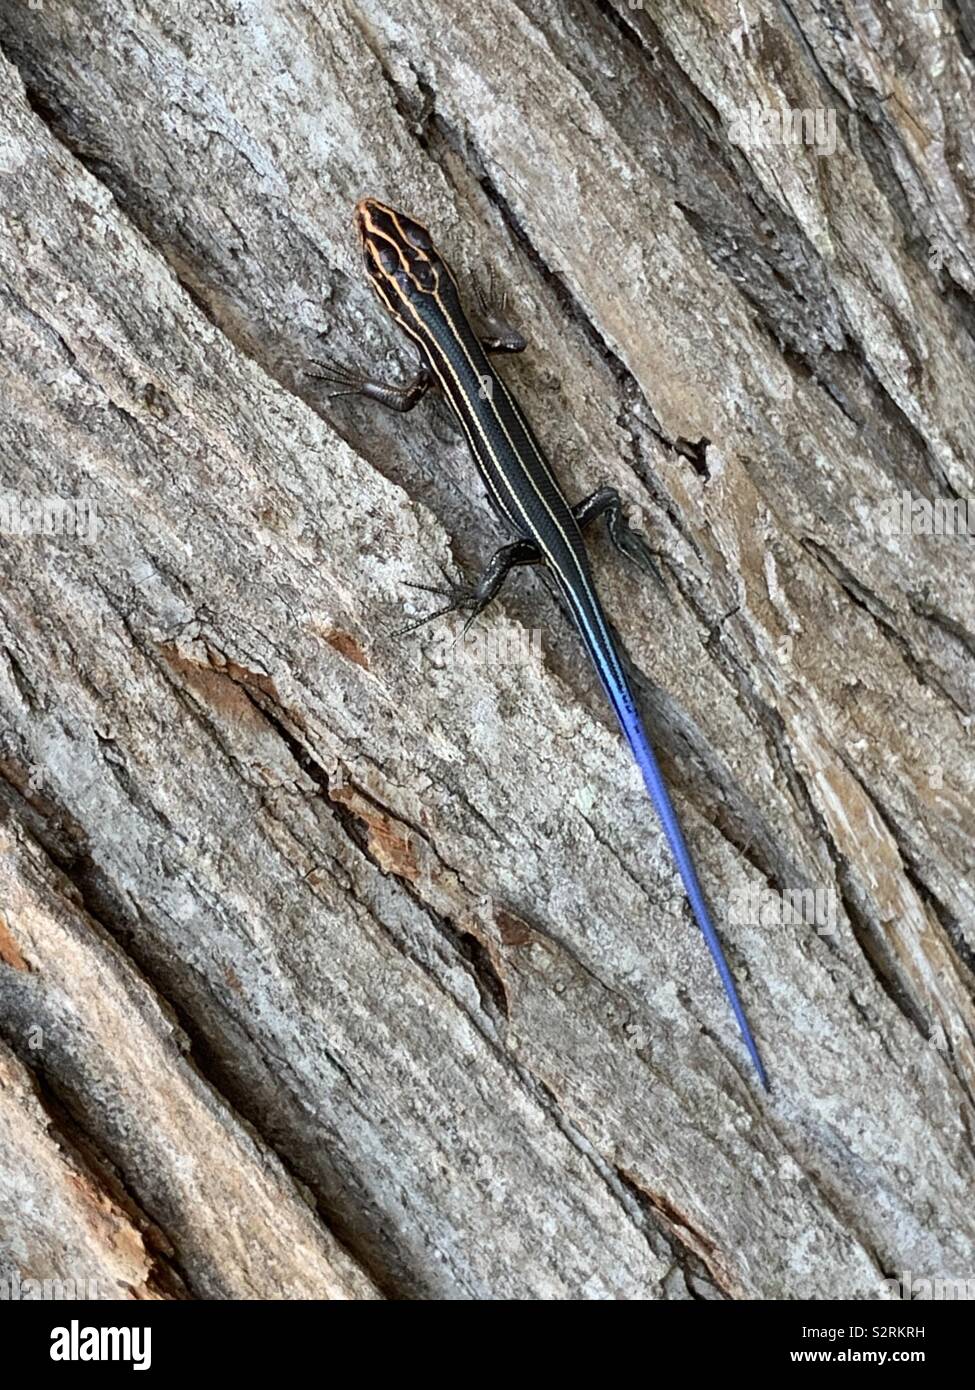 Closeup of blue-tailed skink lizard on tree bark Stock Photo